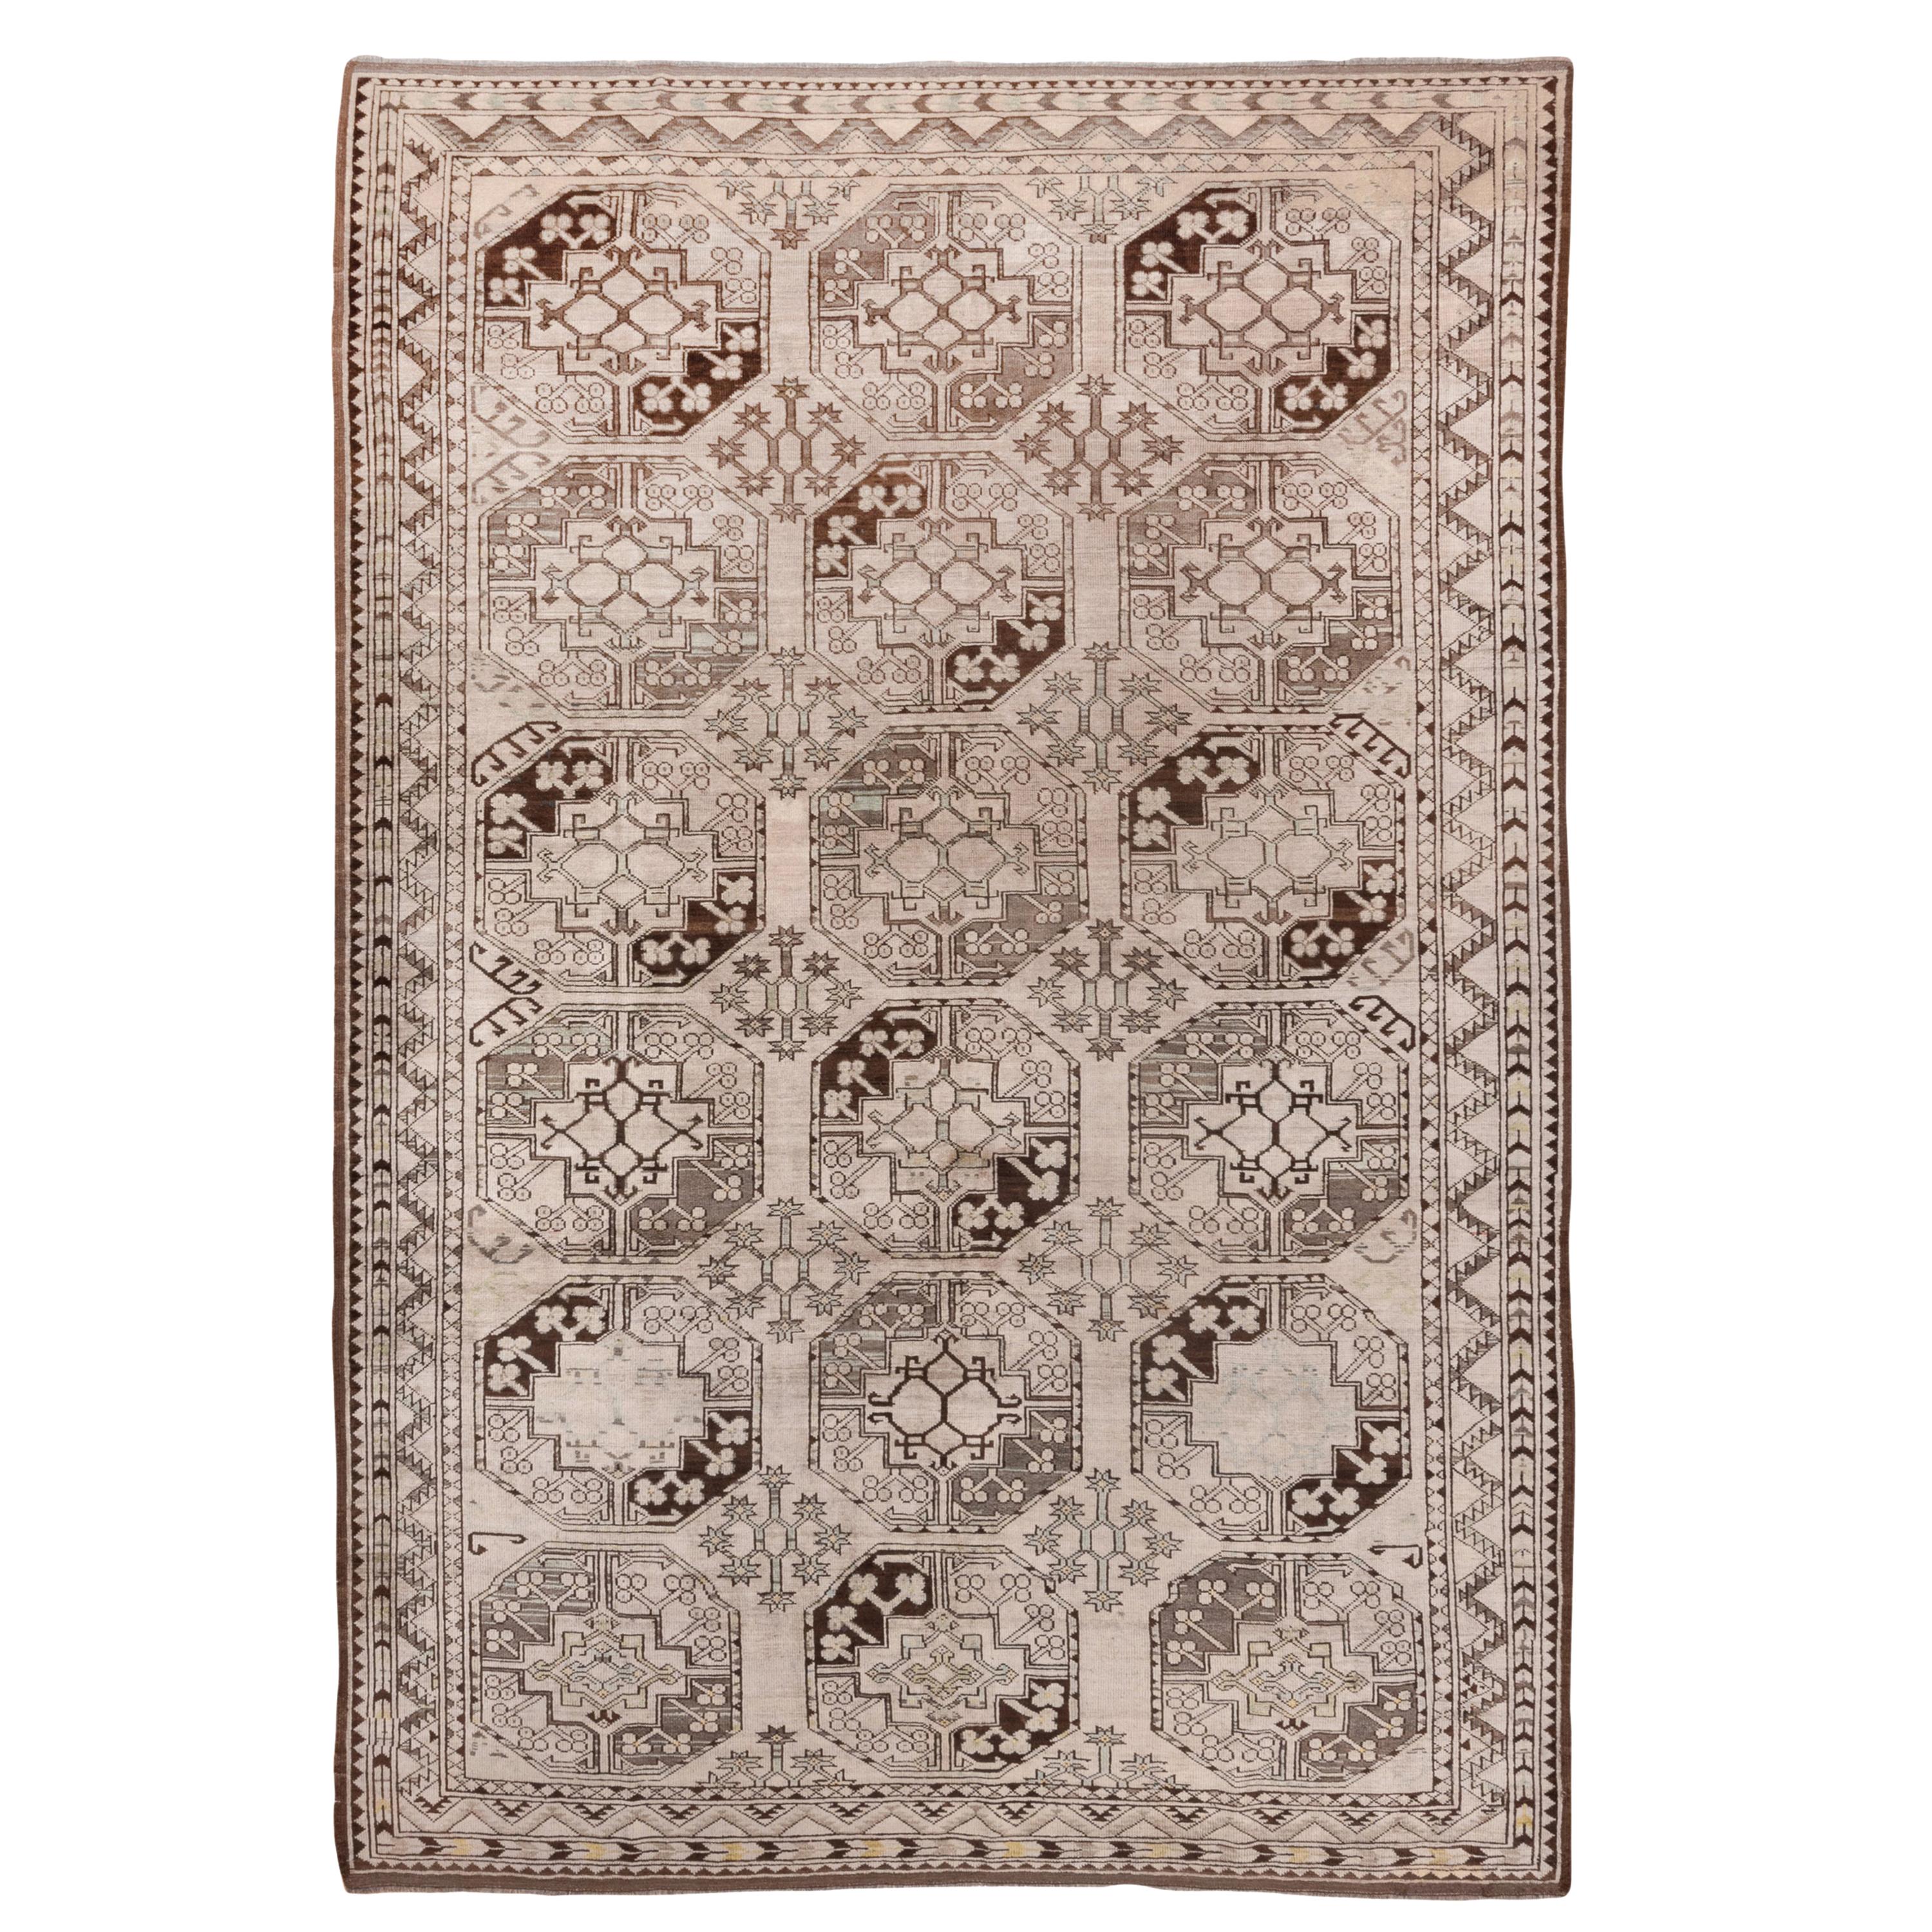 Antique Tribal Afghan Ersari Carpet, All-Over Field, Ivory Light Brown Field